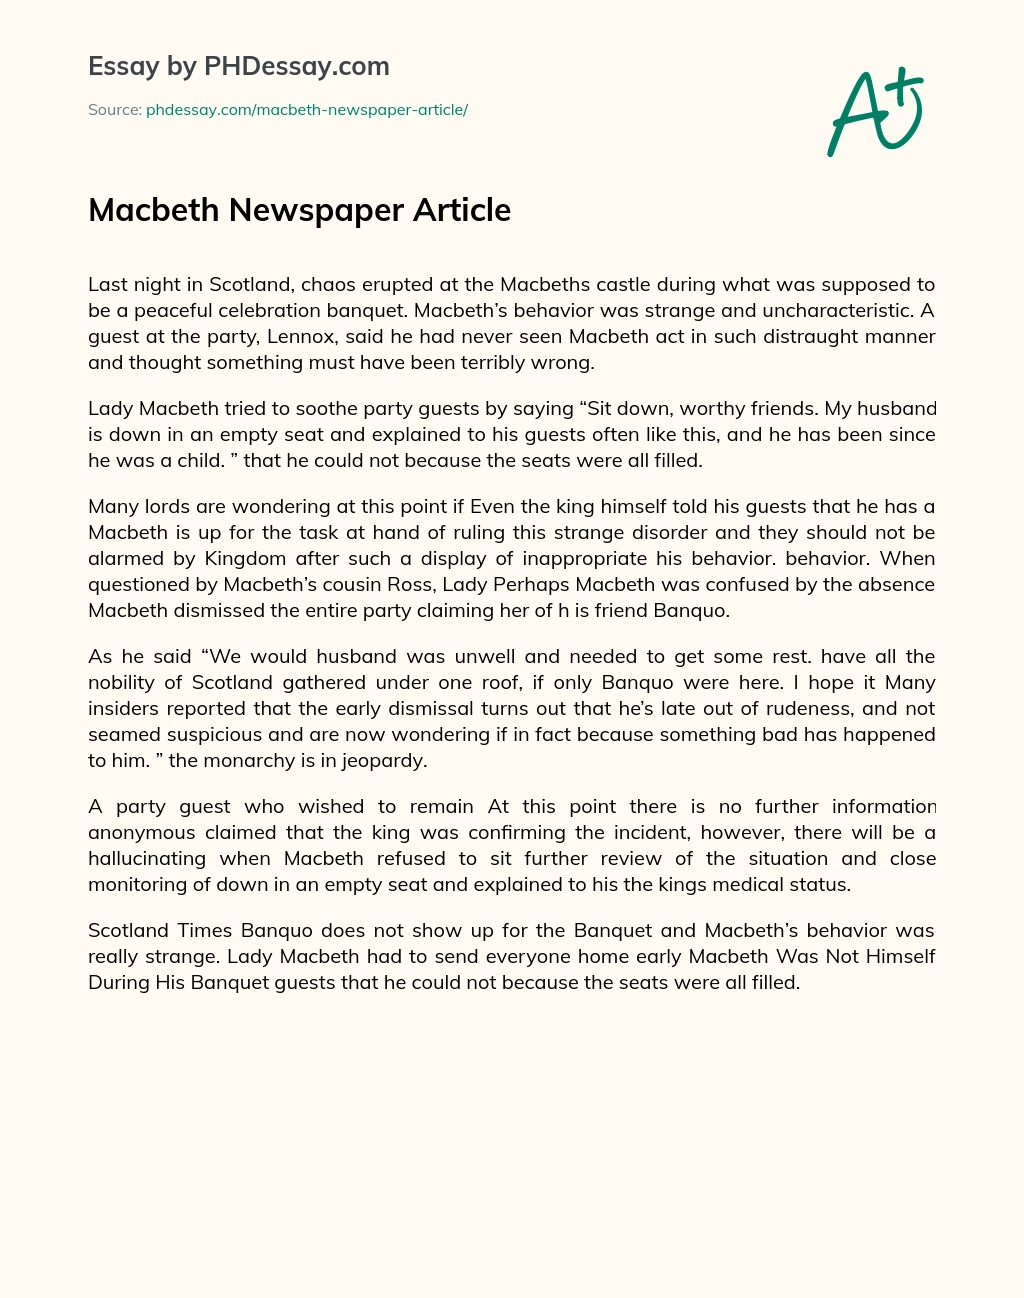 Macbeth Newspaper Article essay